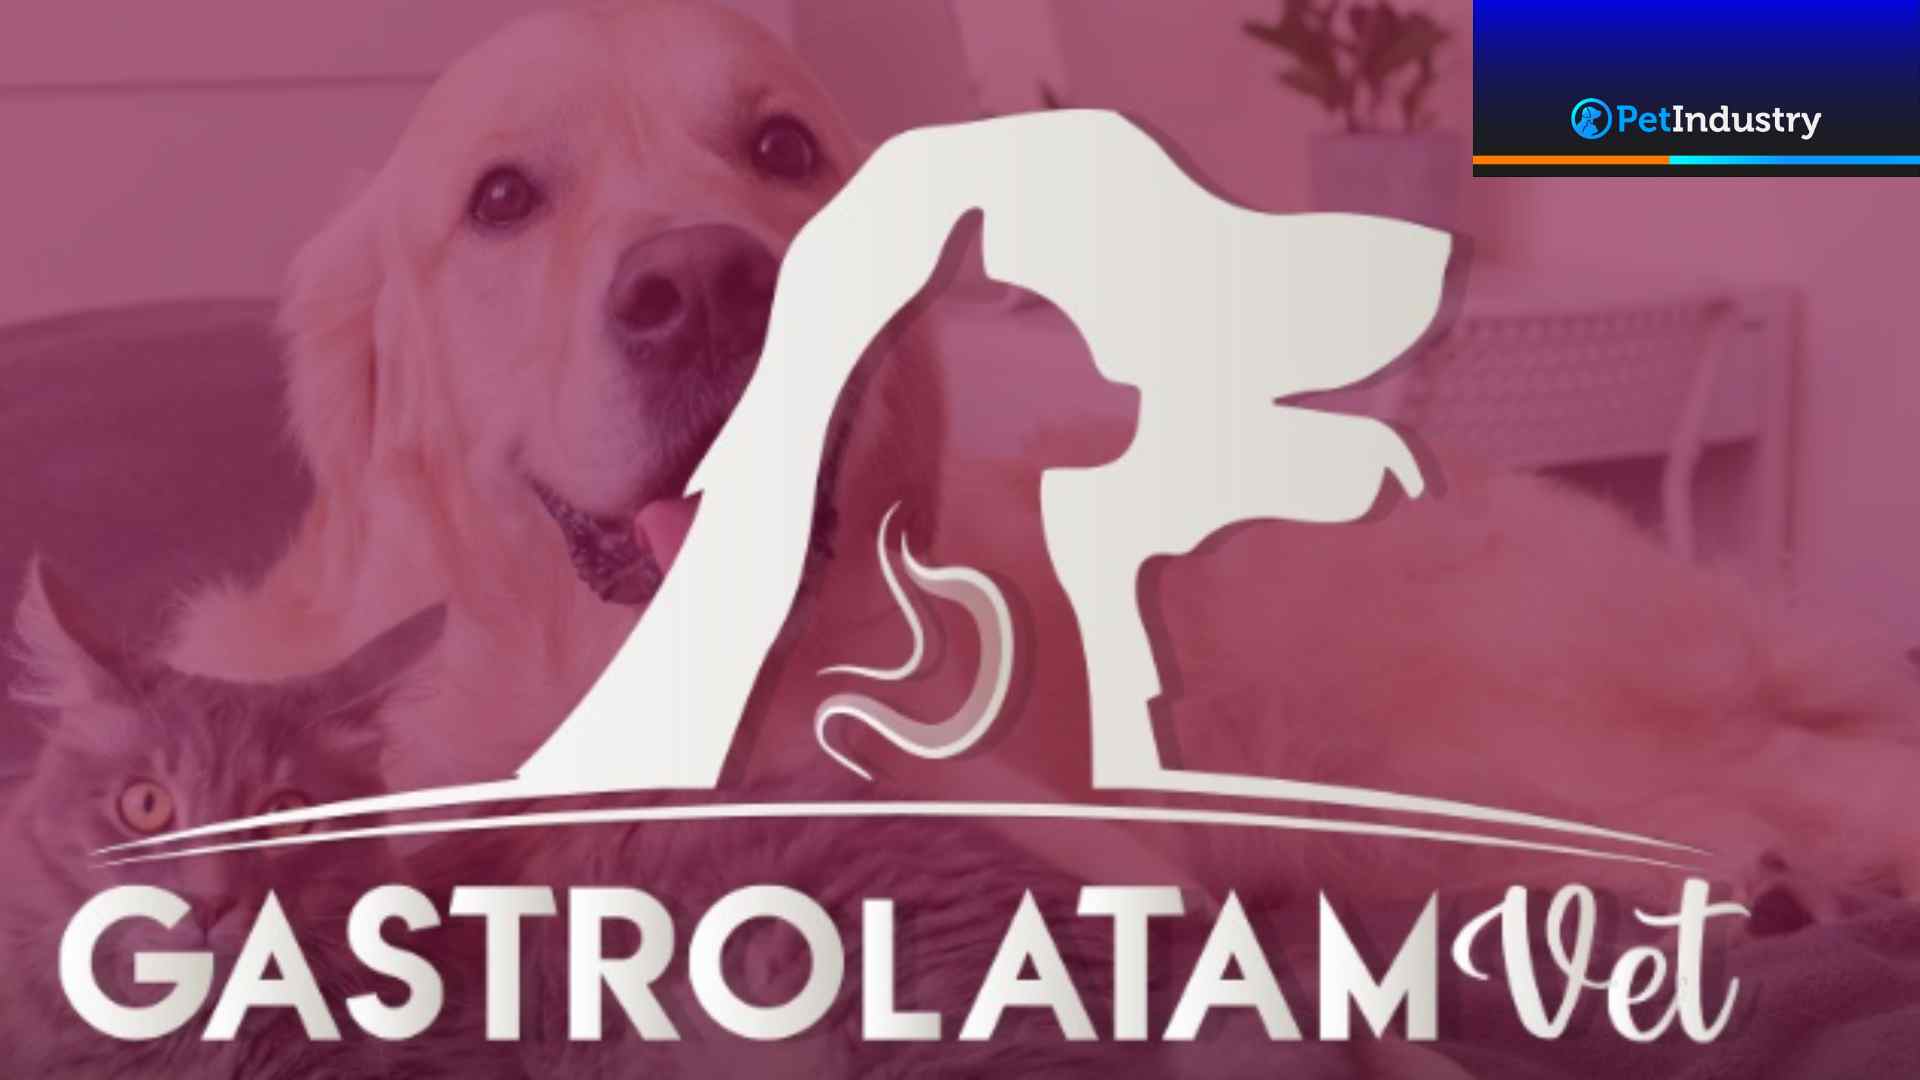 gastrolatamvet-Pet-Industry-Medicina-Veterinaria-Clinica-Mascotas-Perros-Gatos